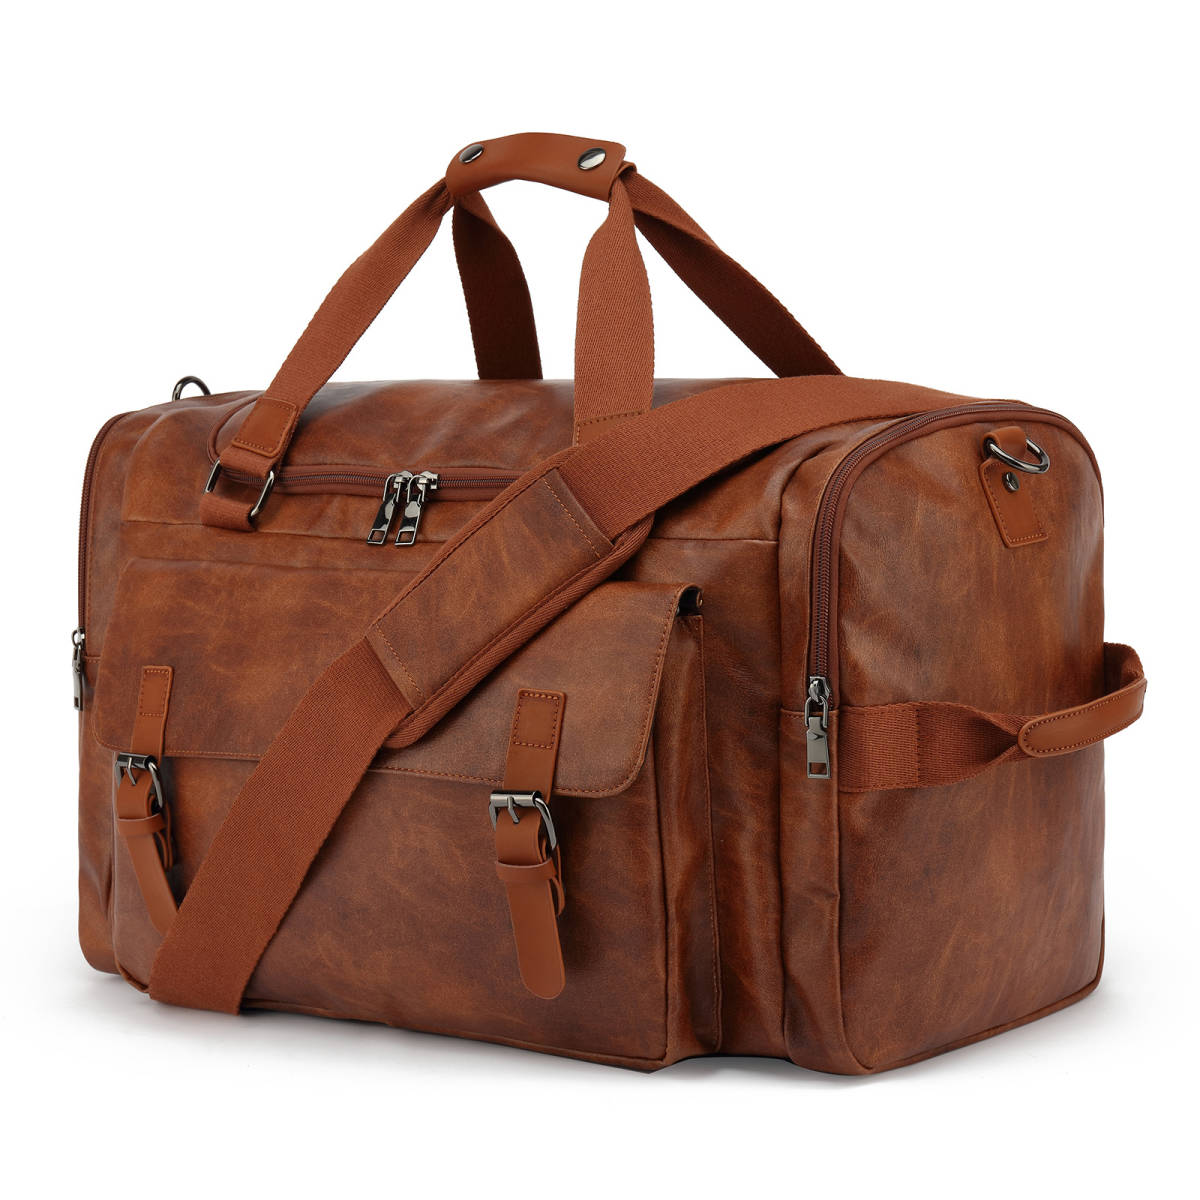  new goods new arrival . сolor selection possible Boston bag drum bag shoulder bag tote bag Carry on men's high capacity pu leather handbag 